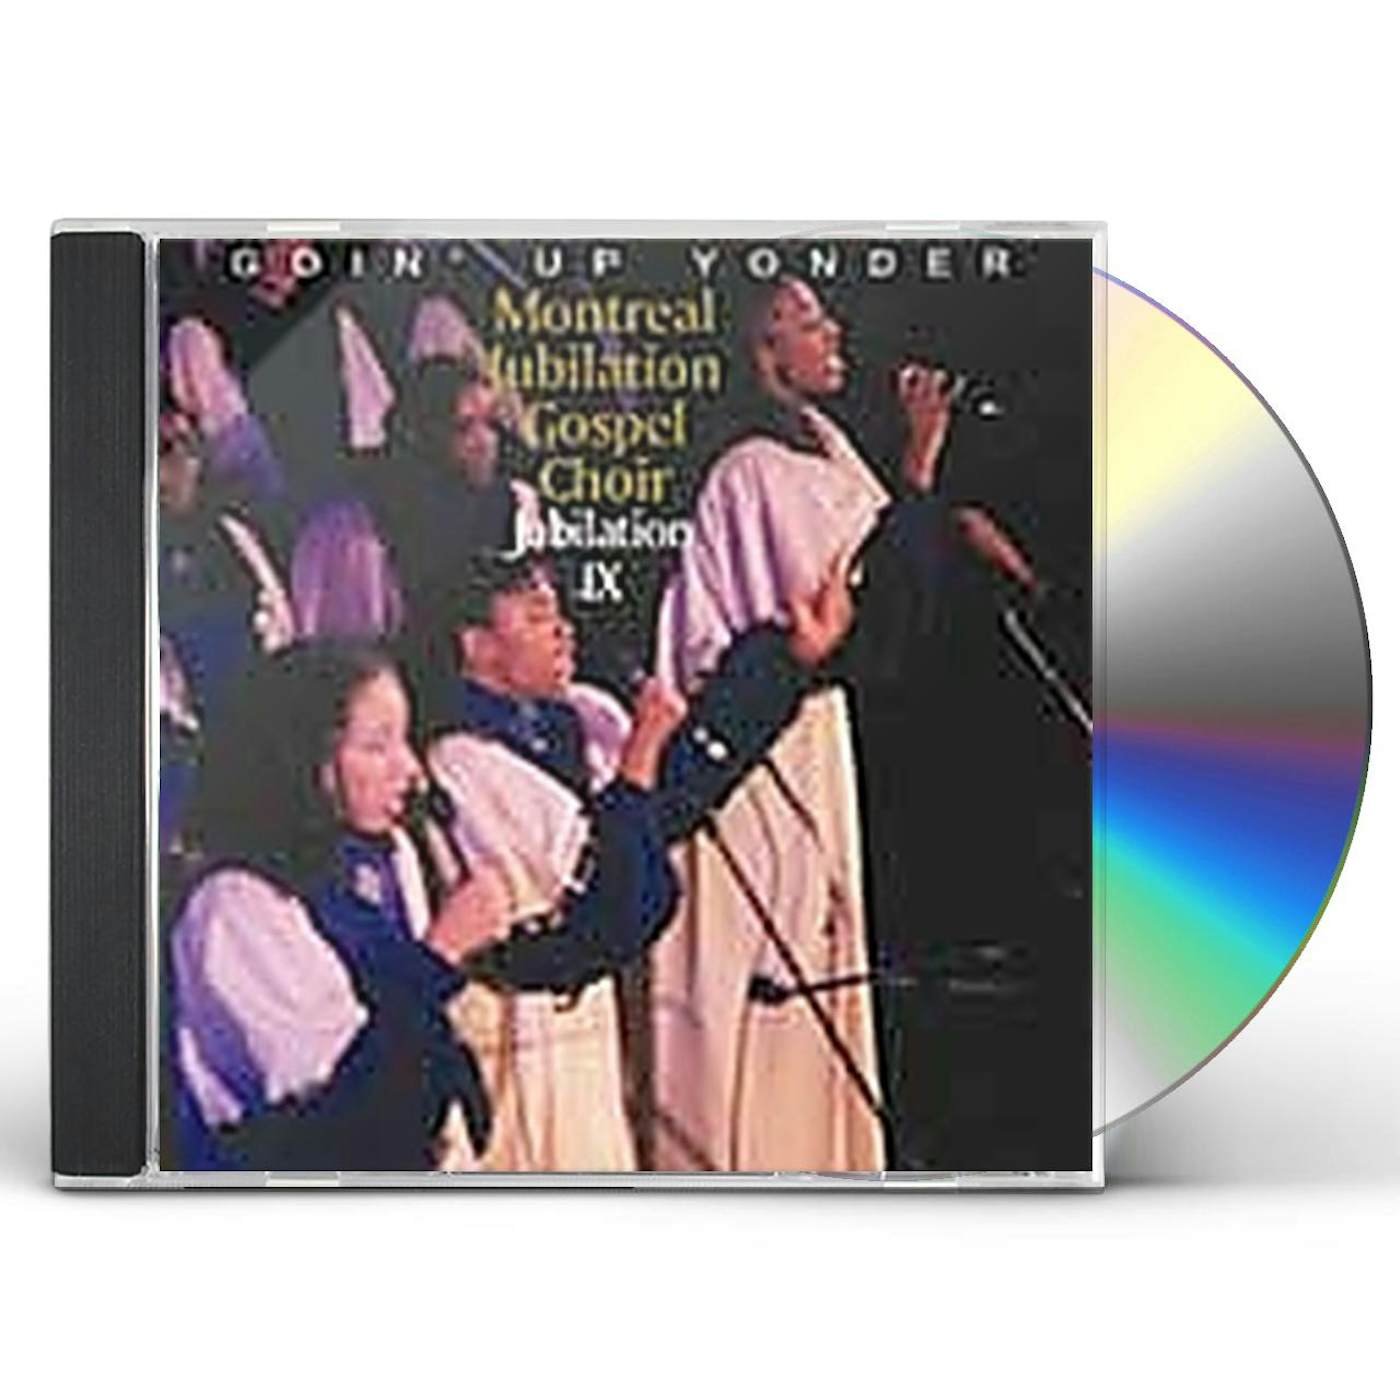 Montreal Jubilation Gospel Choir JUBILATION 9: GOIN UP YONDER CD